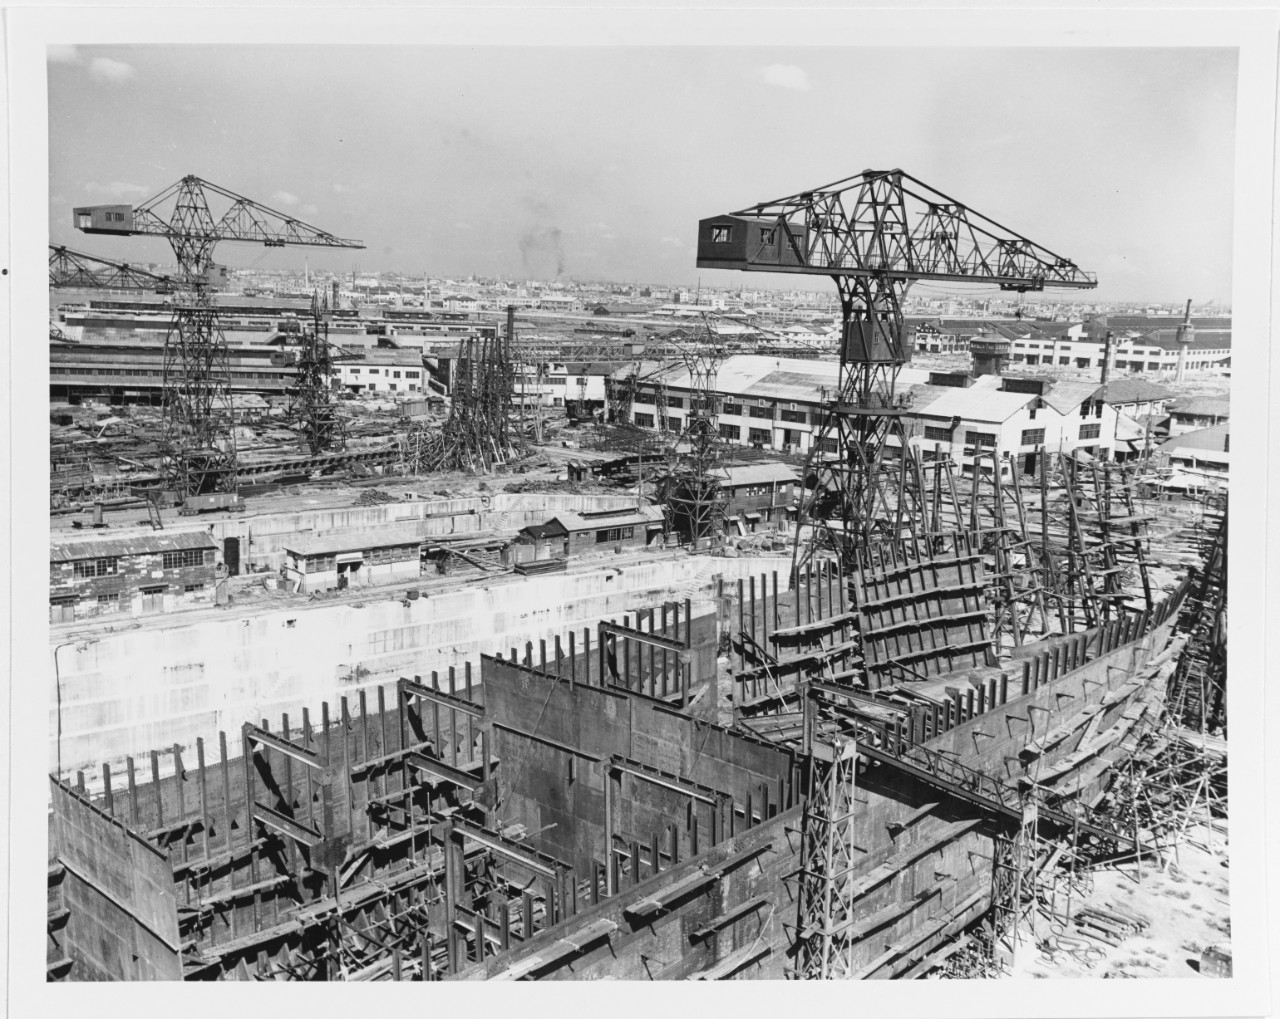 Ishikawajima Shipyard, Tokyo, Japan. October 17, 1945